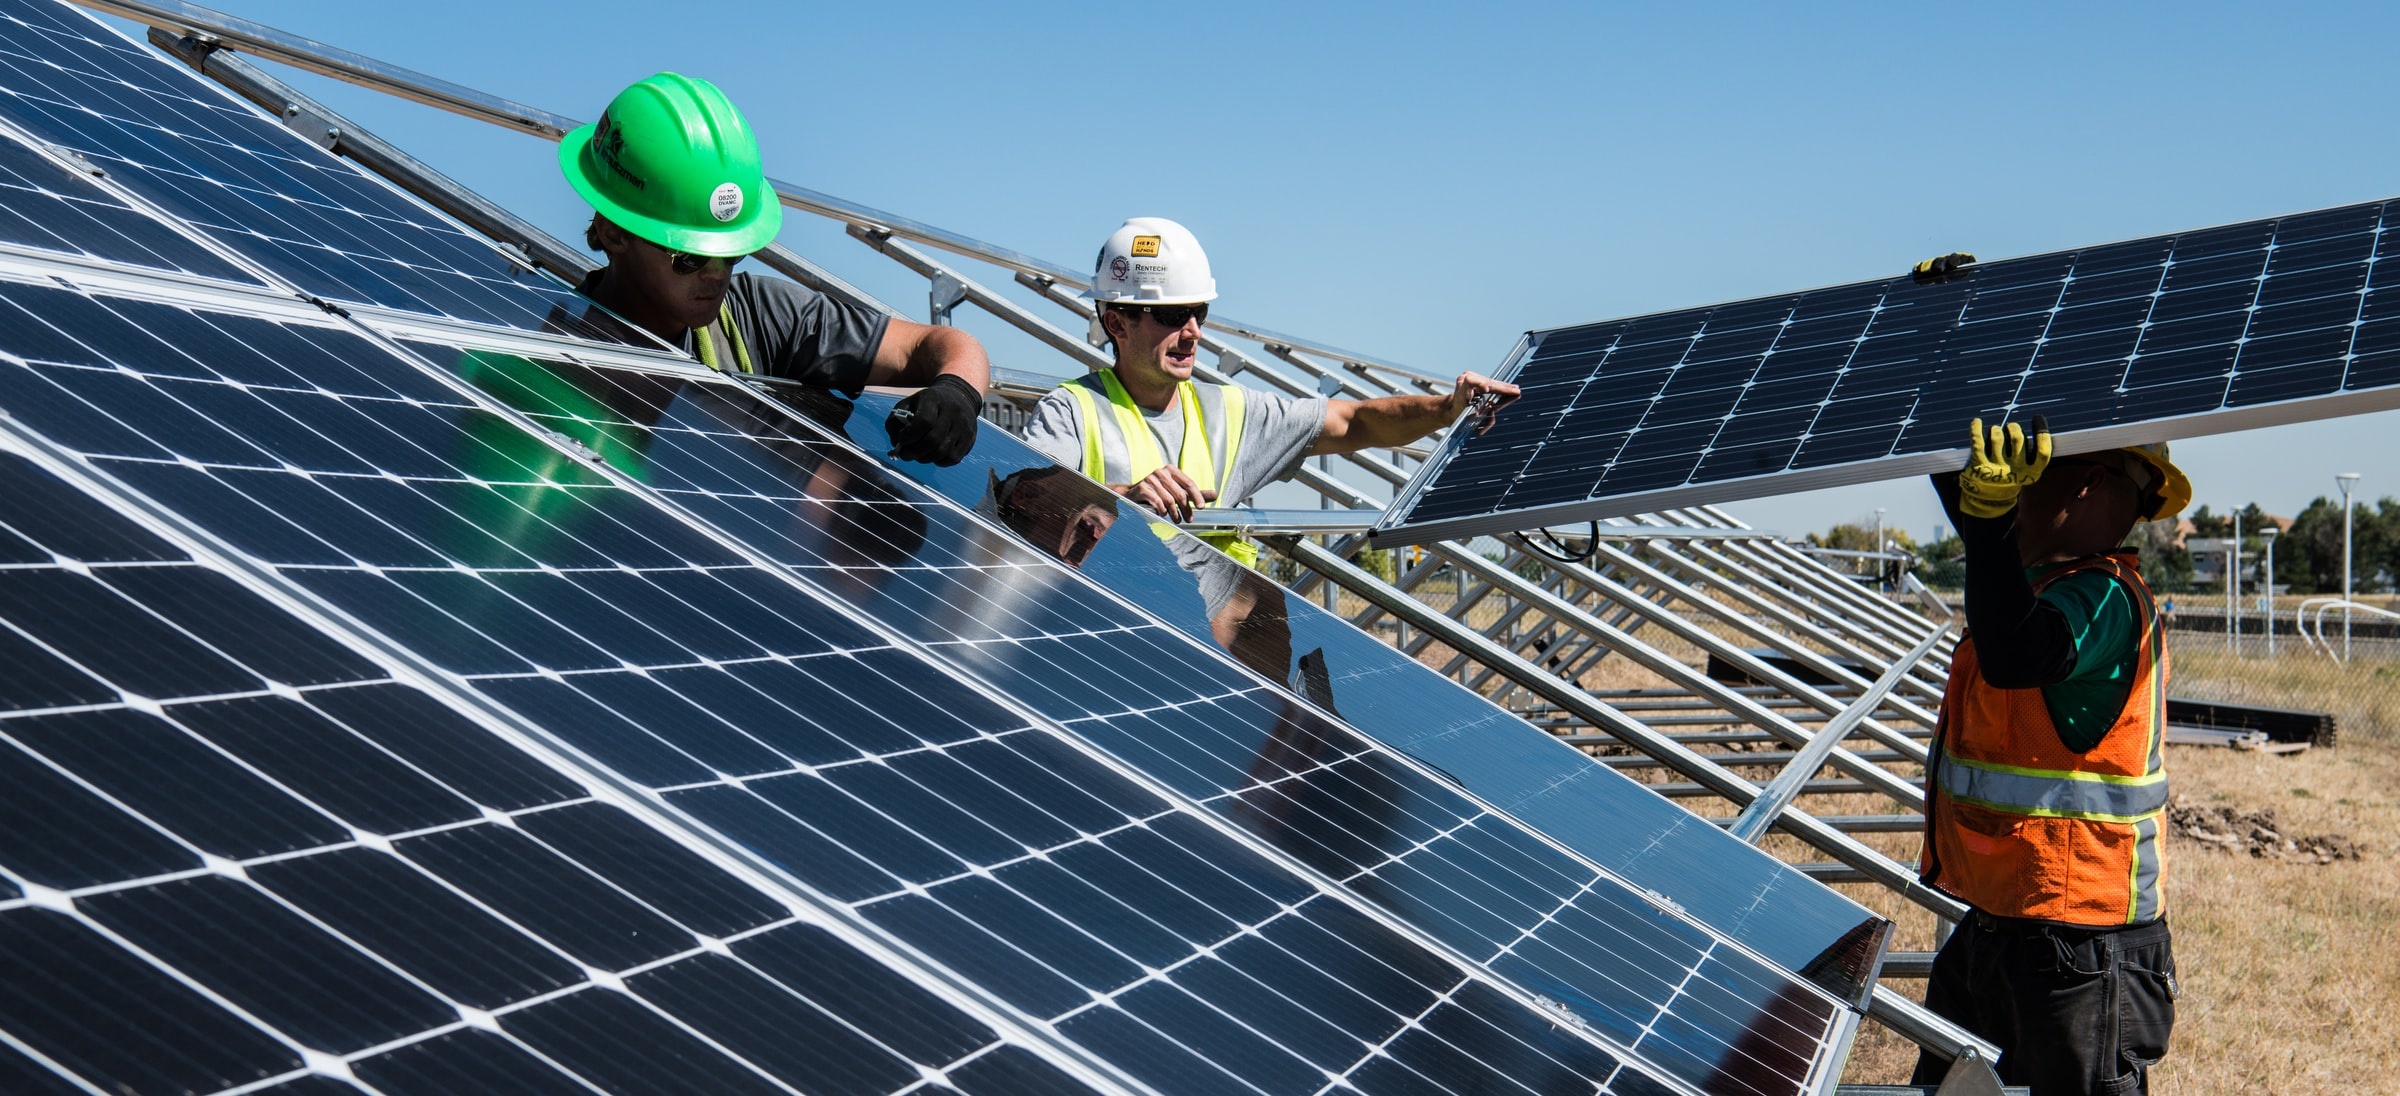 Solar Panels, Solar Energy, Solar Power, Solar PV, Jobs, Workers, YSG Solar